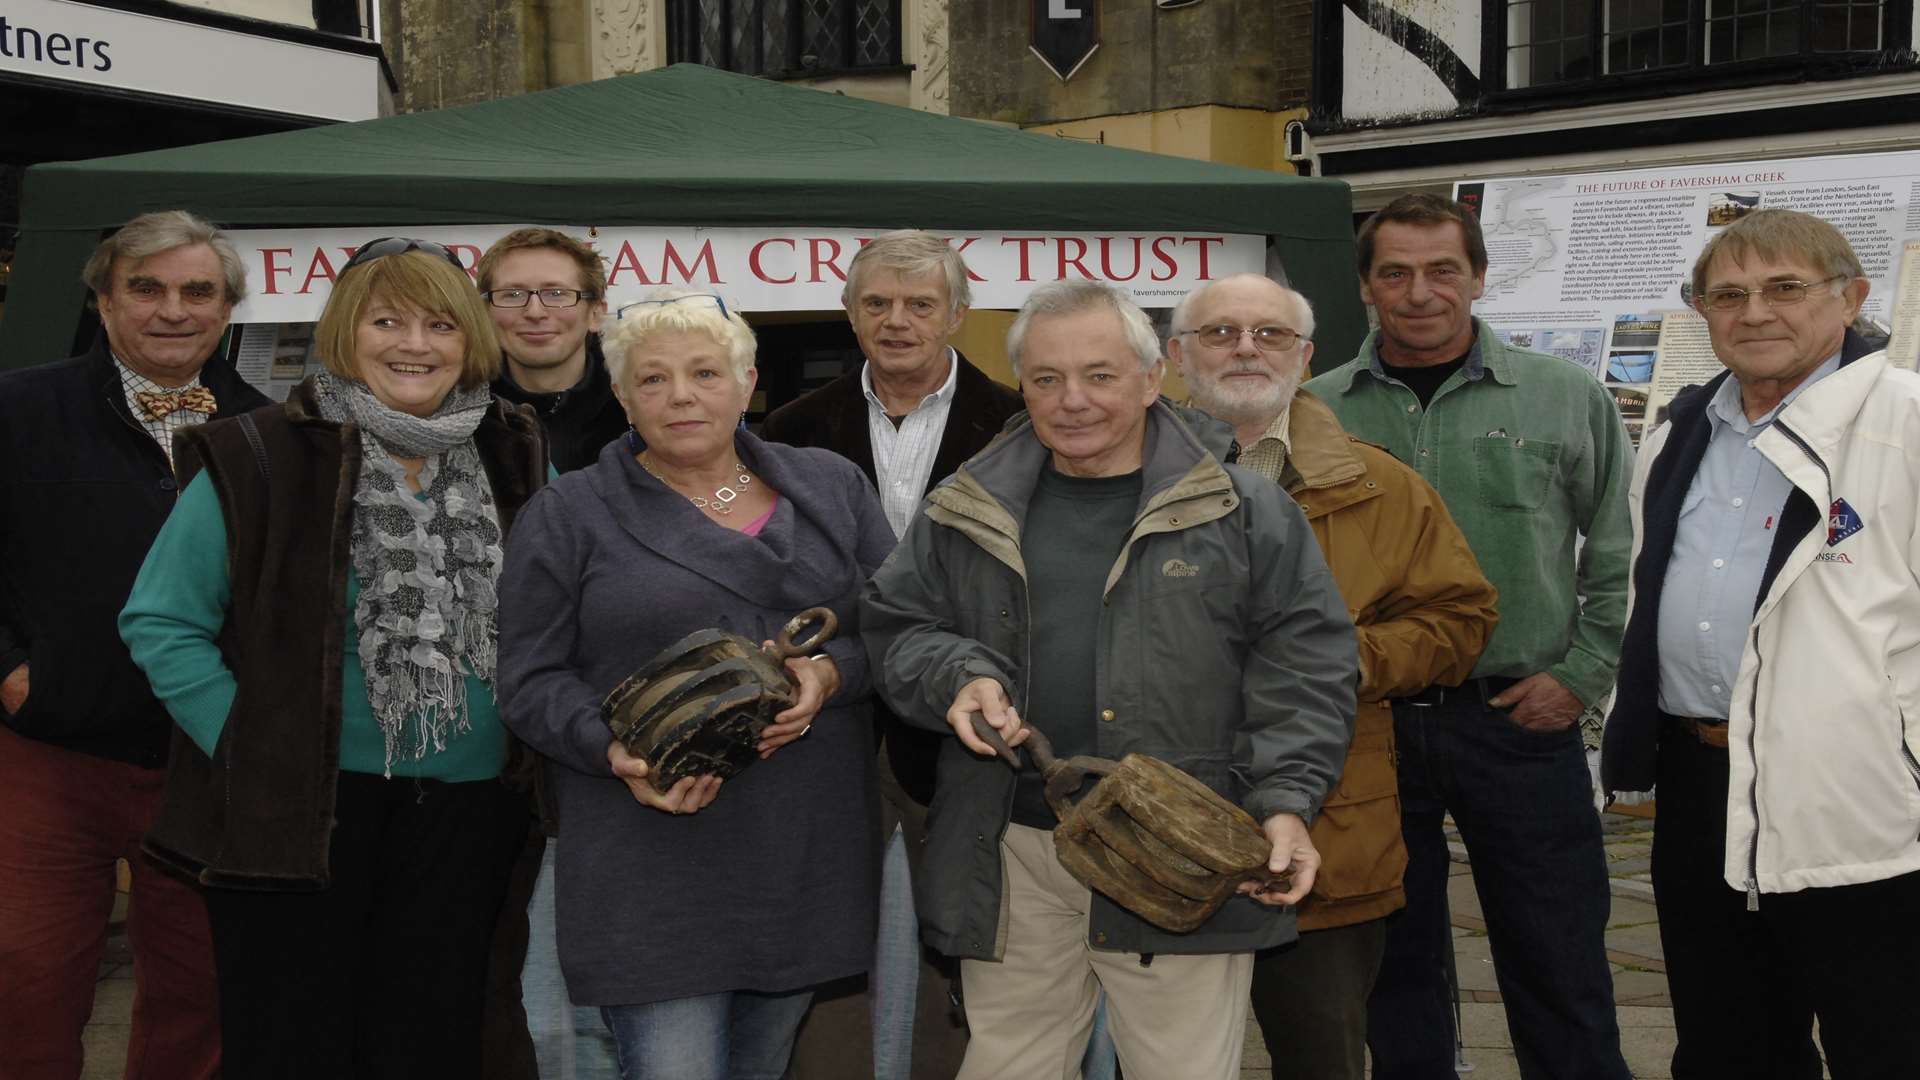 Members of the Faversham Creek Trust